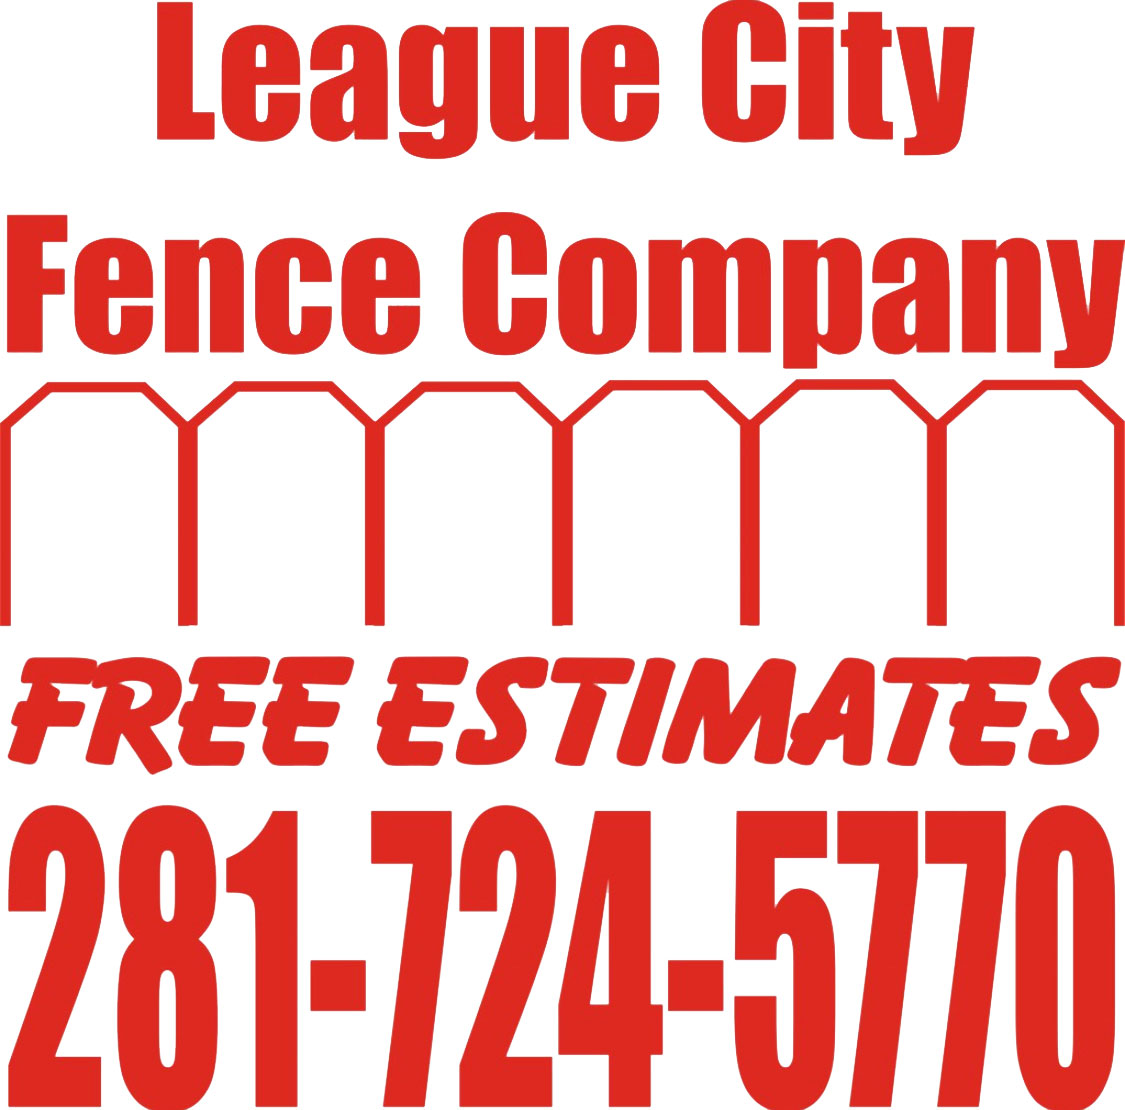 League City Fence Company logo